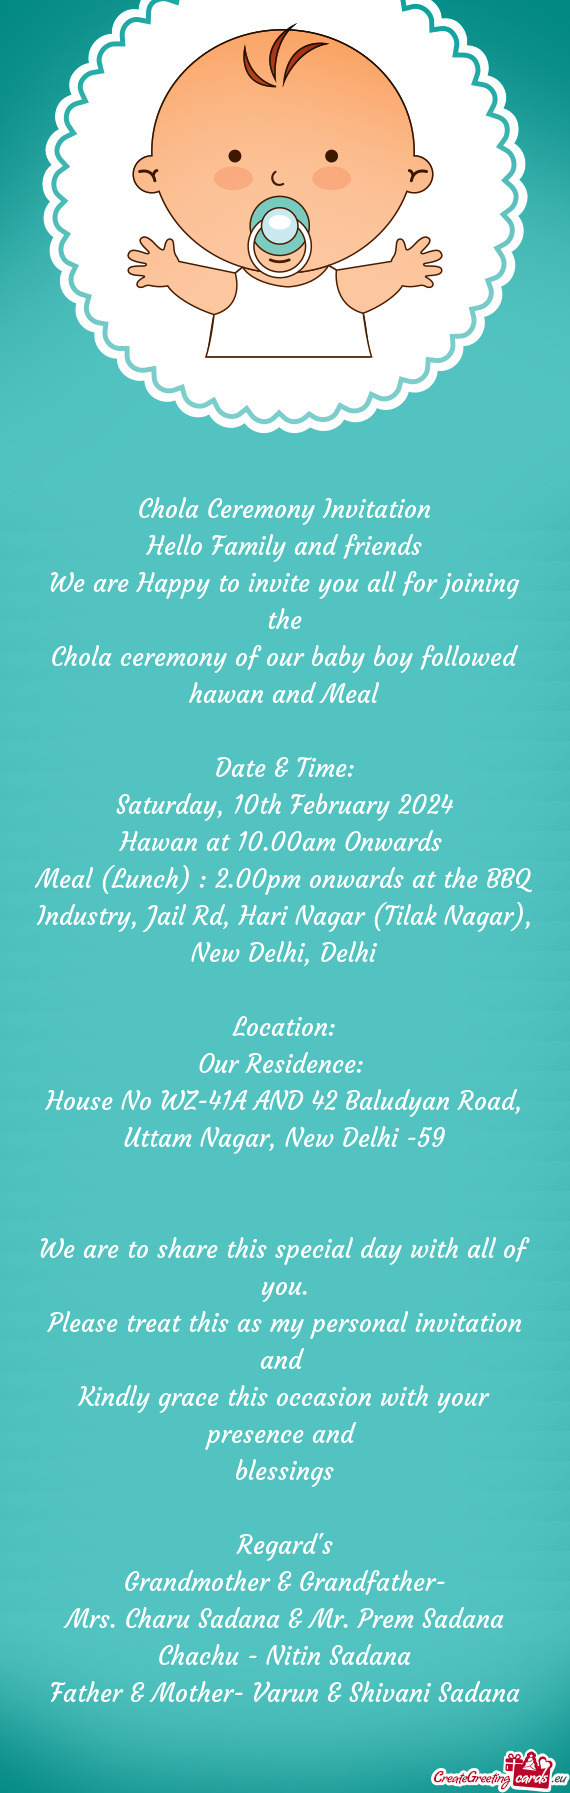 Meal (Lunch) : 2.00pm onwards at the BBQ Industry, Jail Rd, Hari Nagar (Tilak Nagar), New Delhi, Del